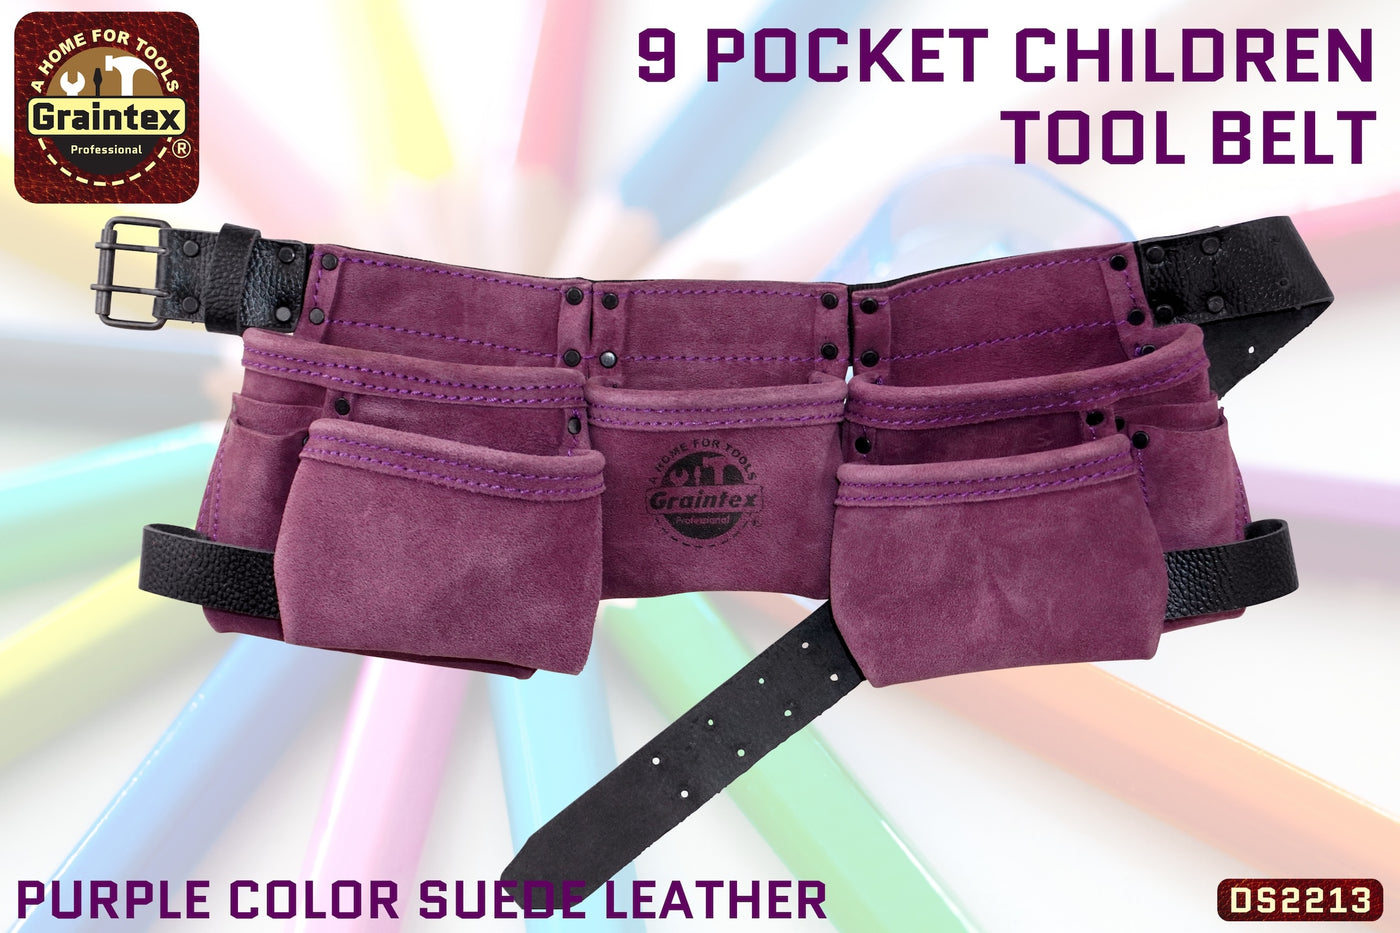 DS2213 :: 9 Pocket Children Tool Belt Purple Color Suede Leather